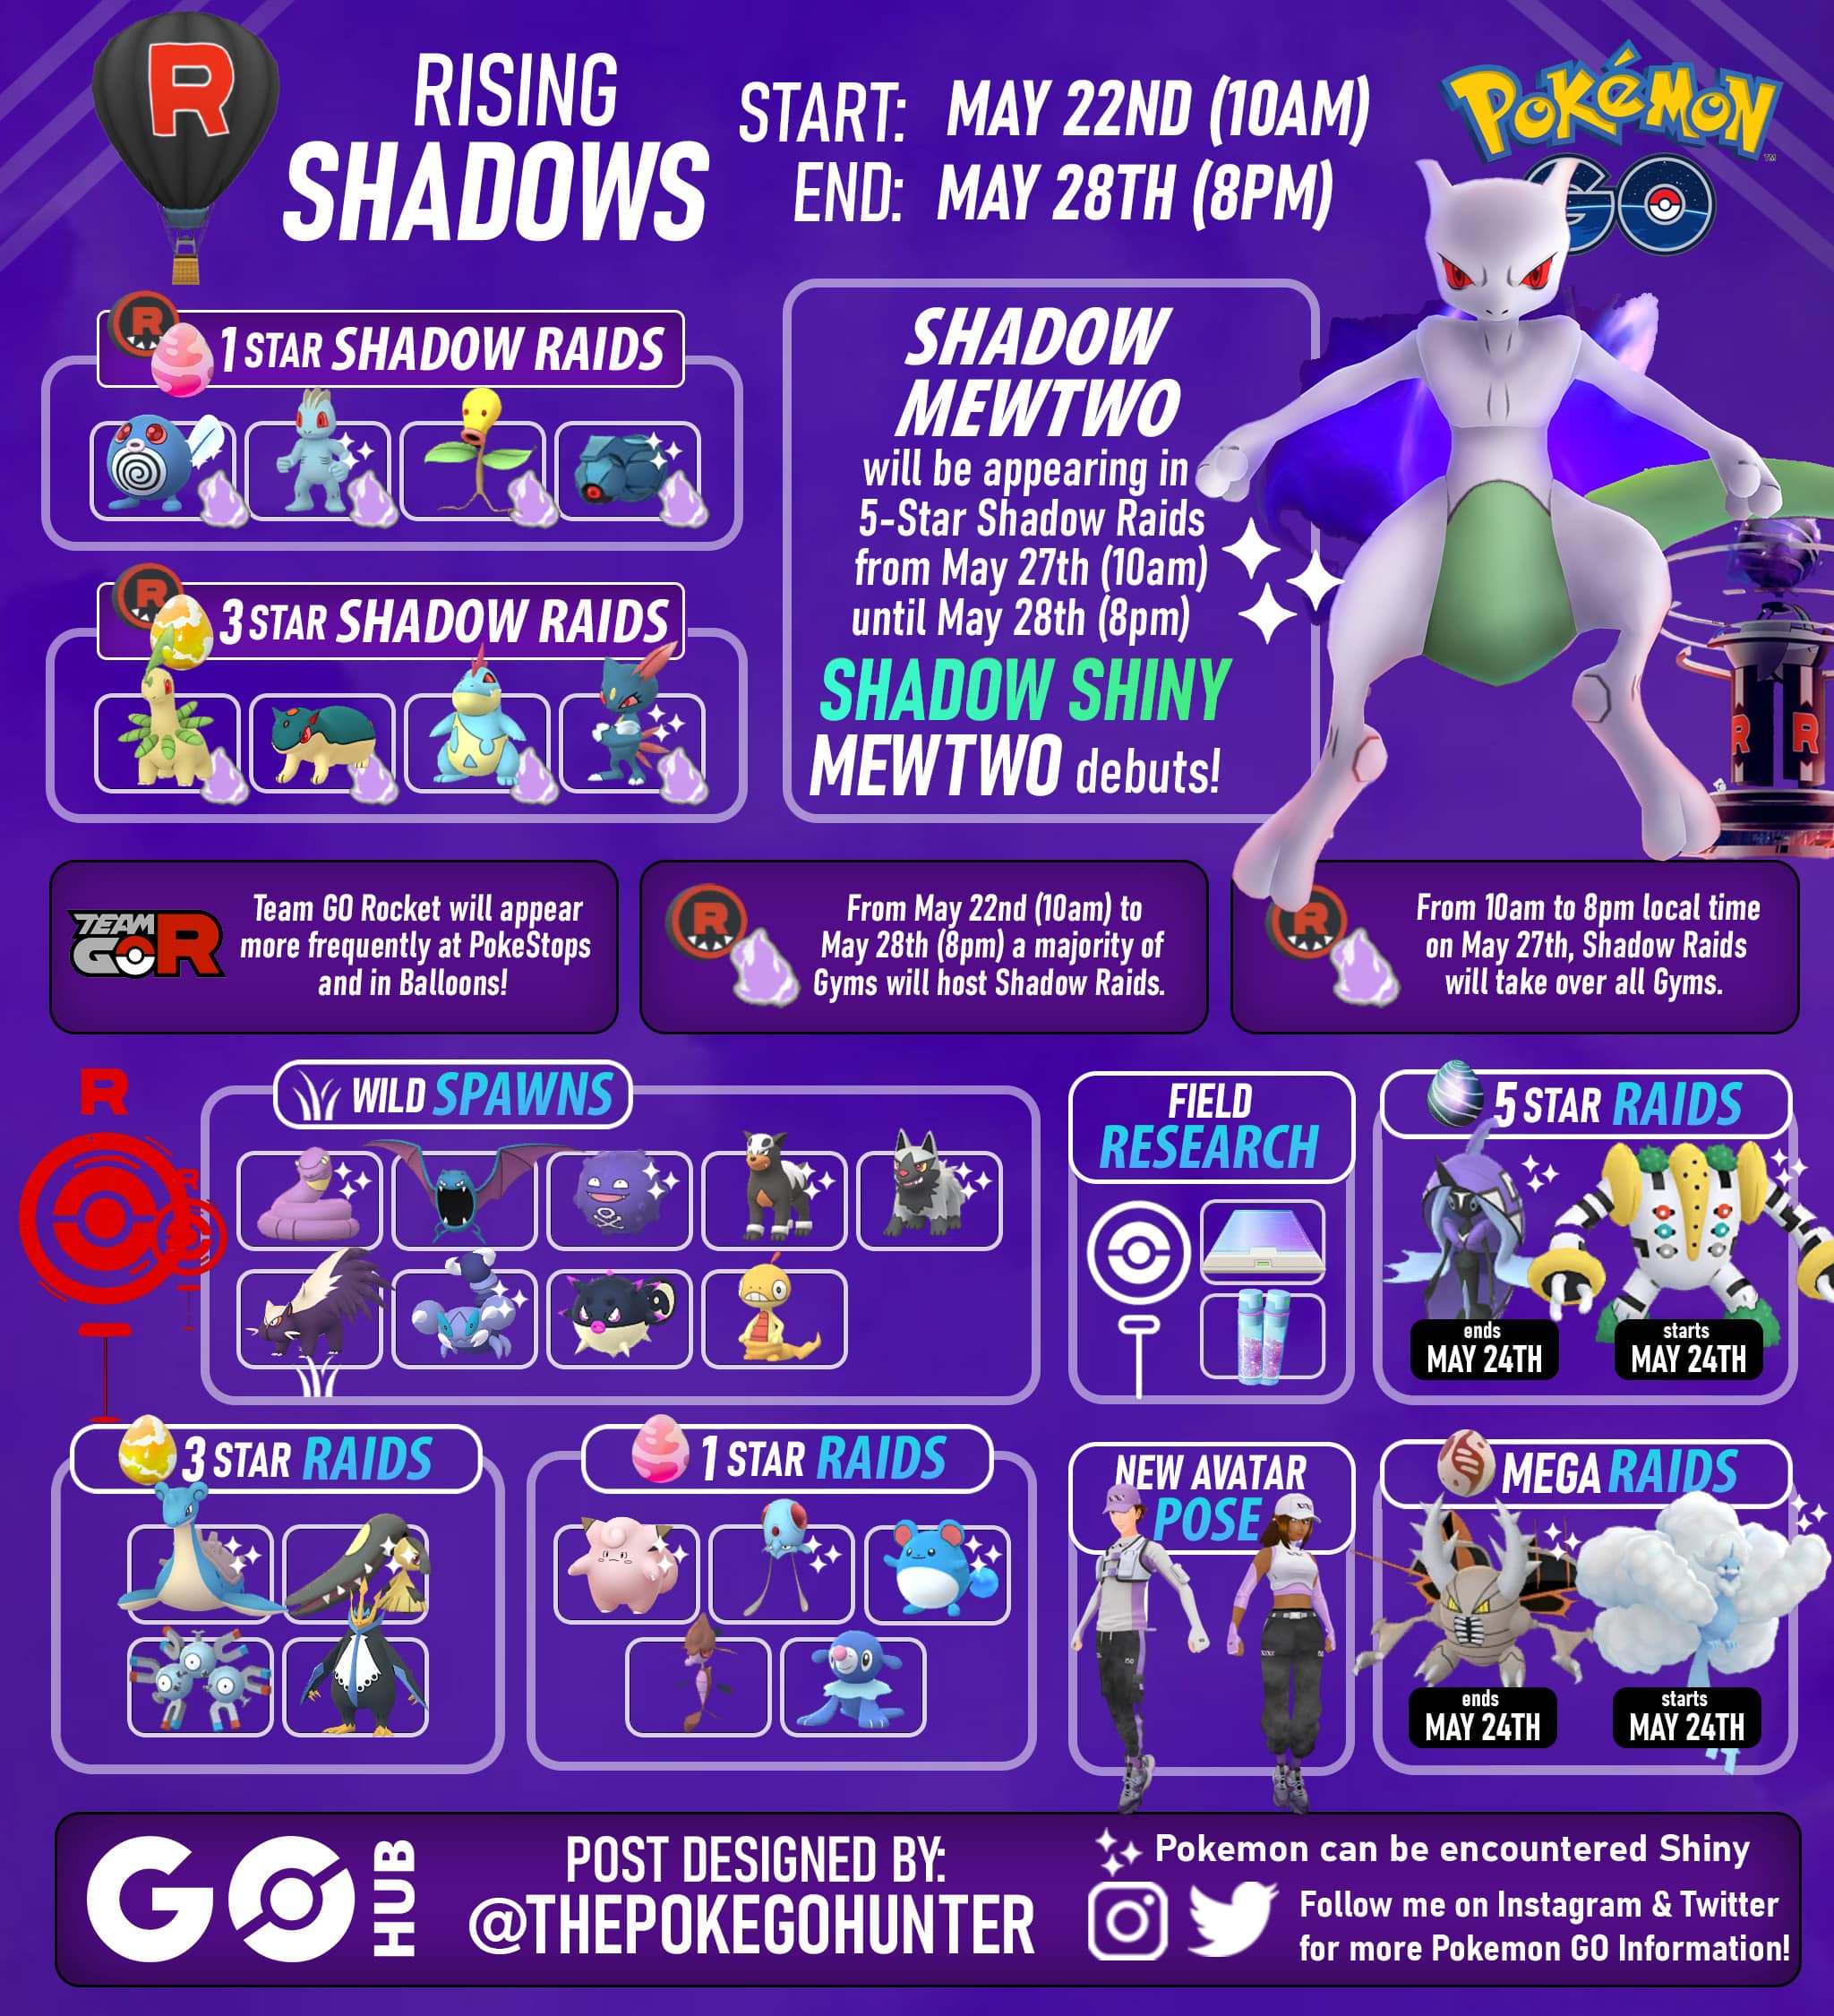 Pokémon GO Rising Shadows Event Pokémon GO Hub